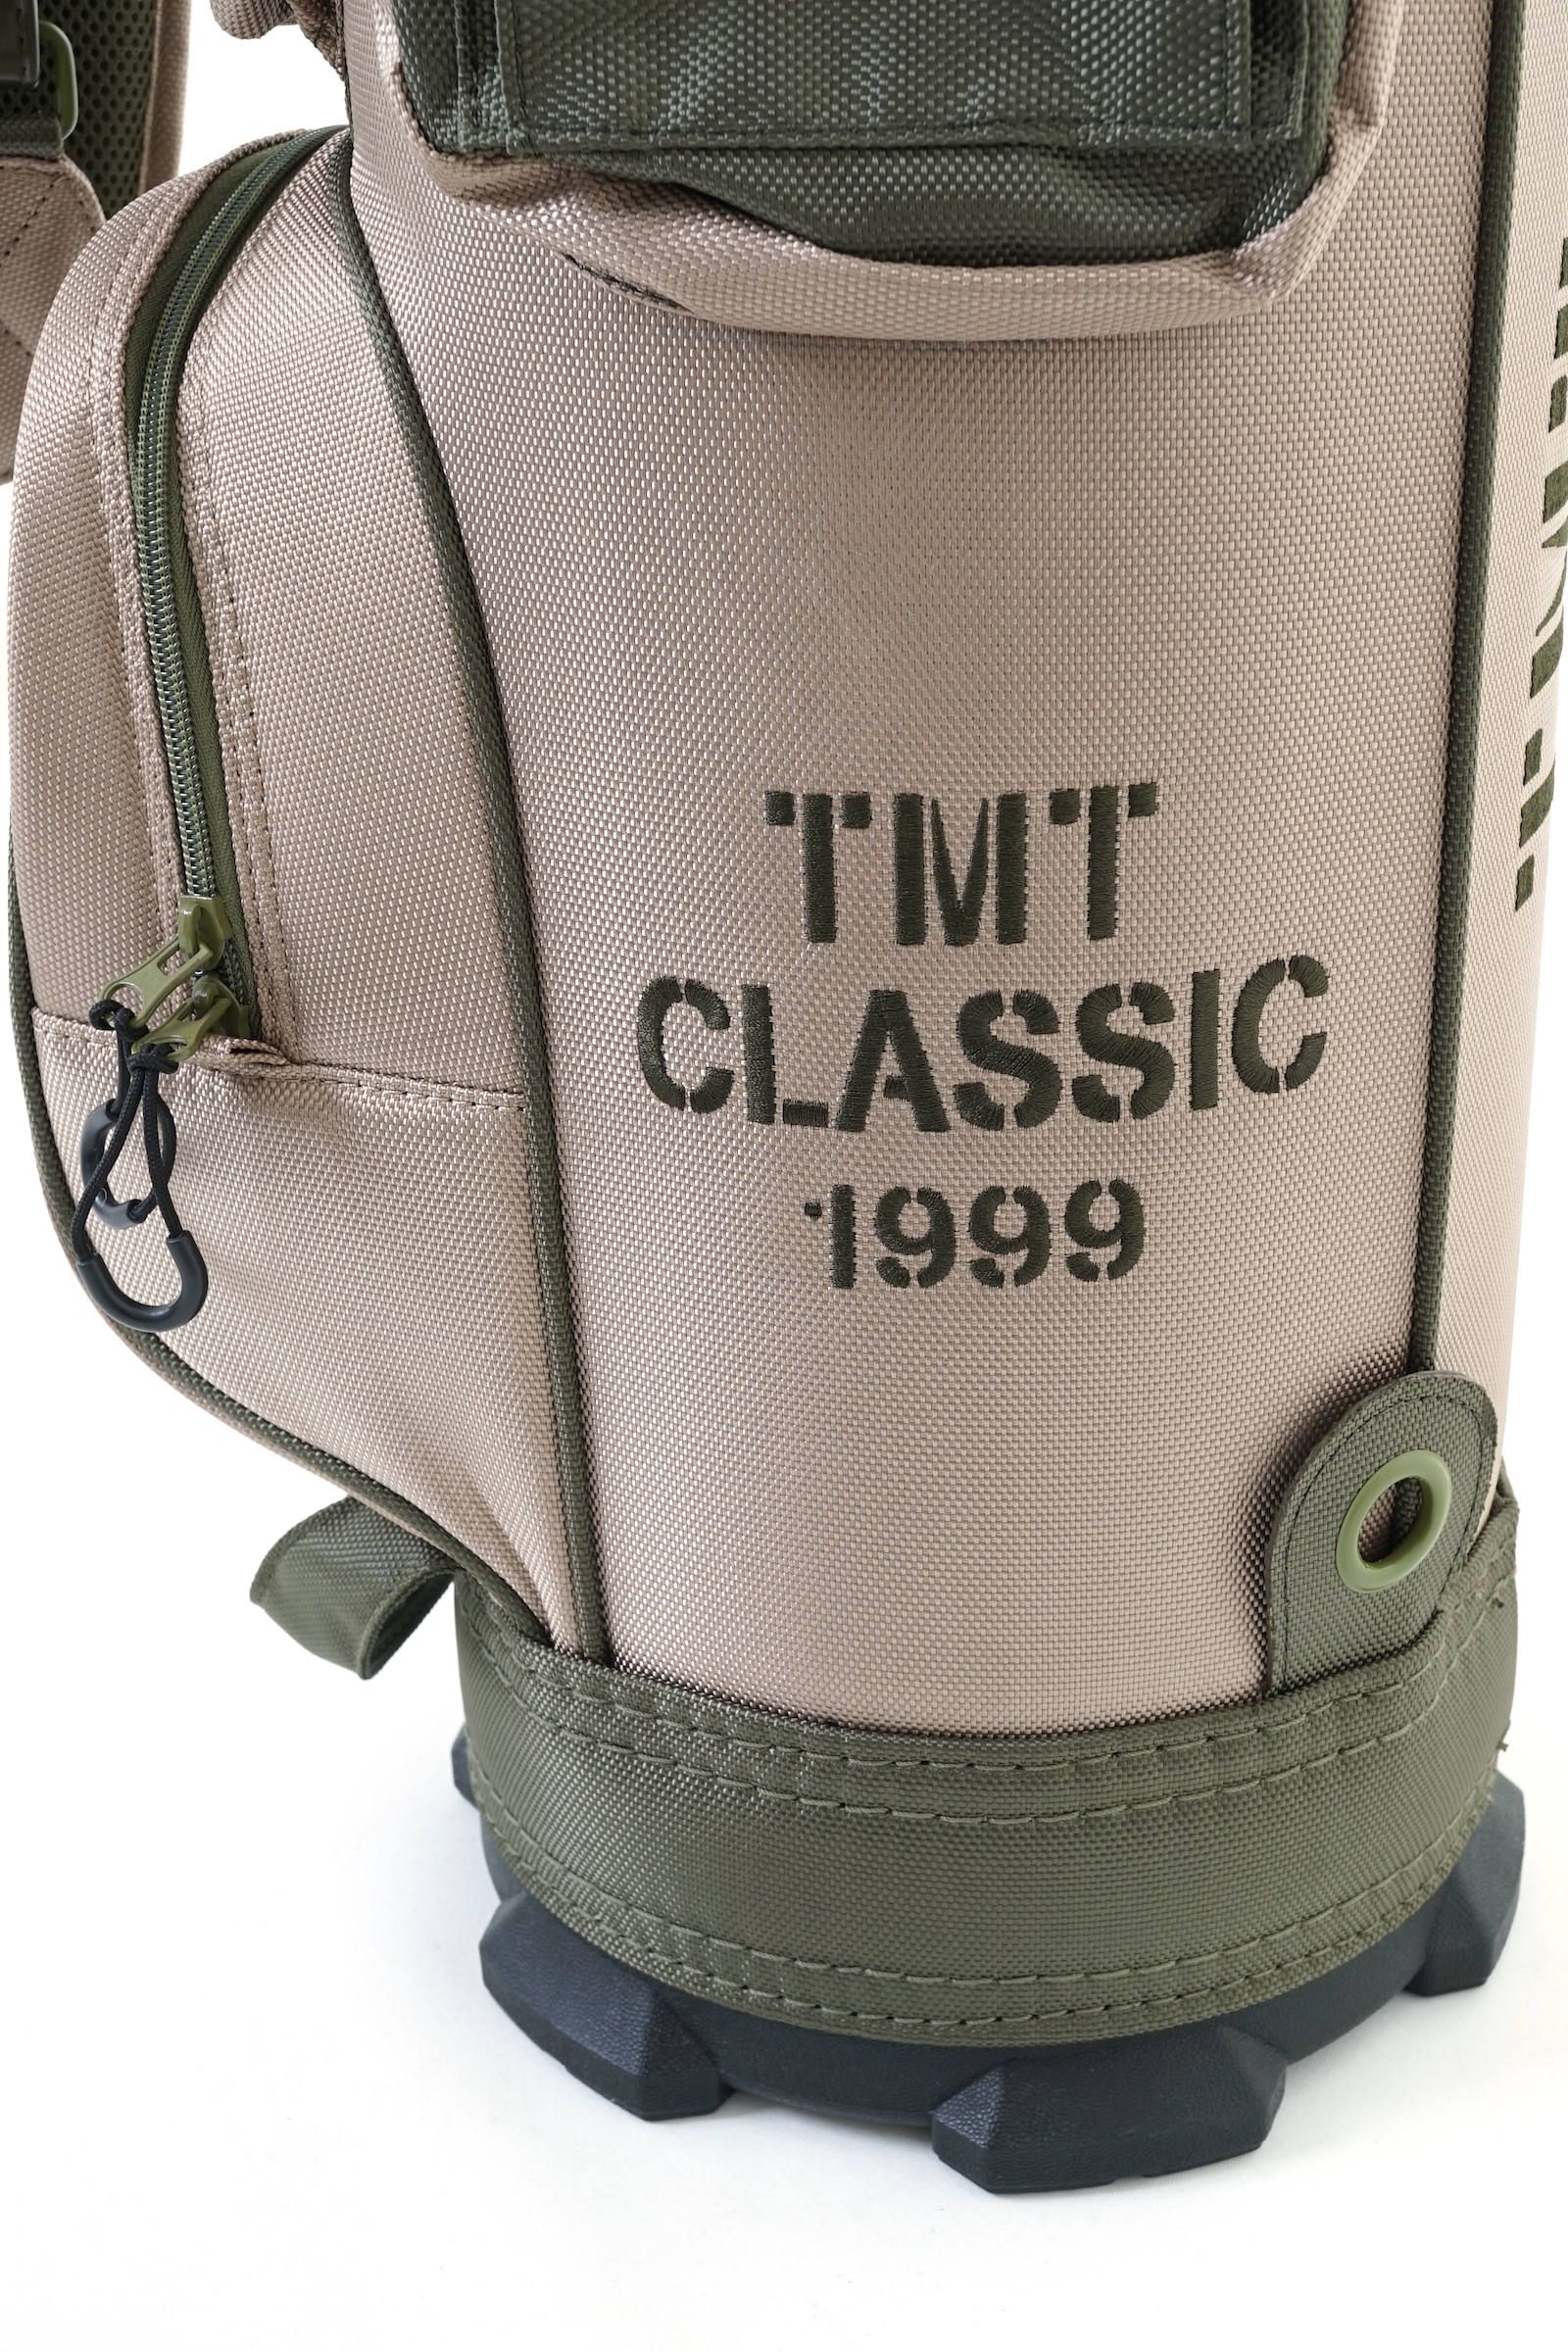 TMT CLASSIC - TMT CLASSIC BALLISTIC CADDIE BAG キャディーバッグ